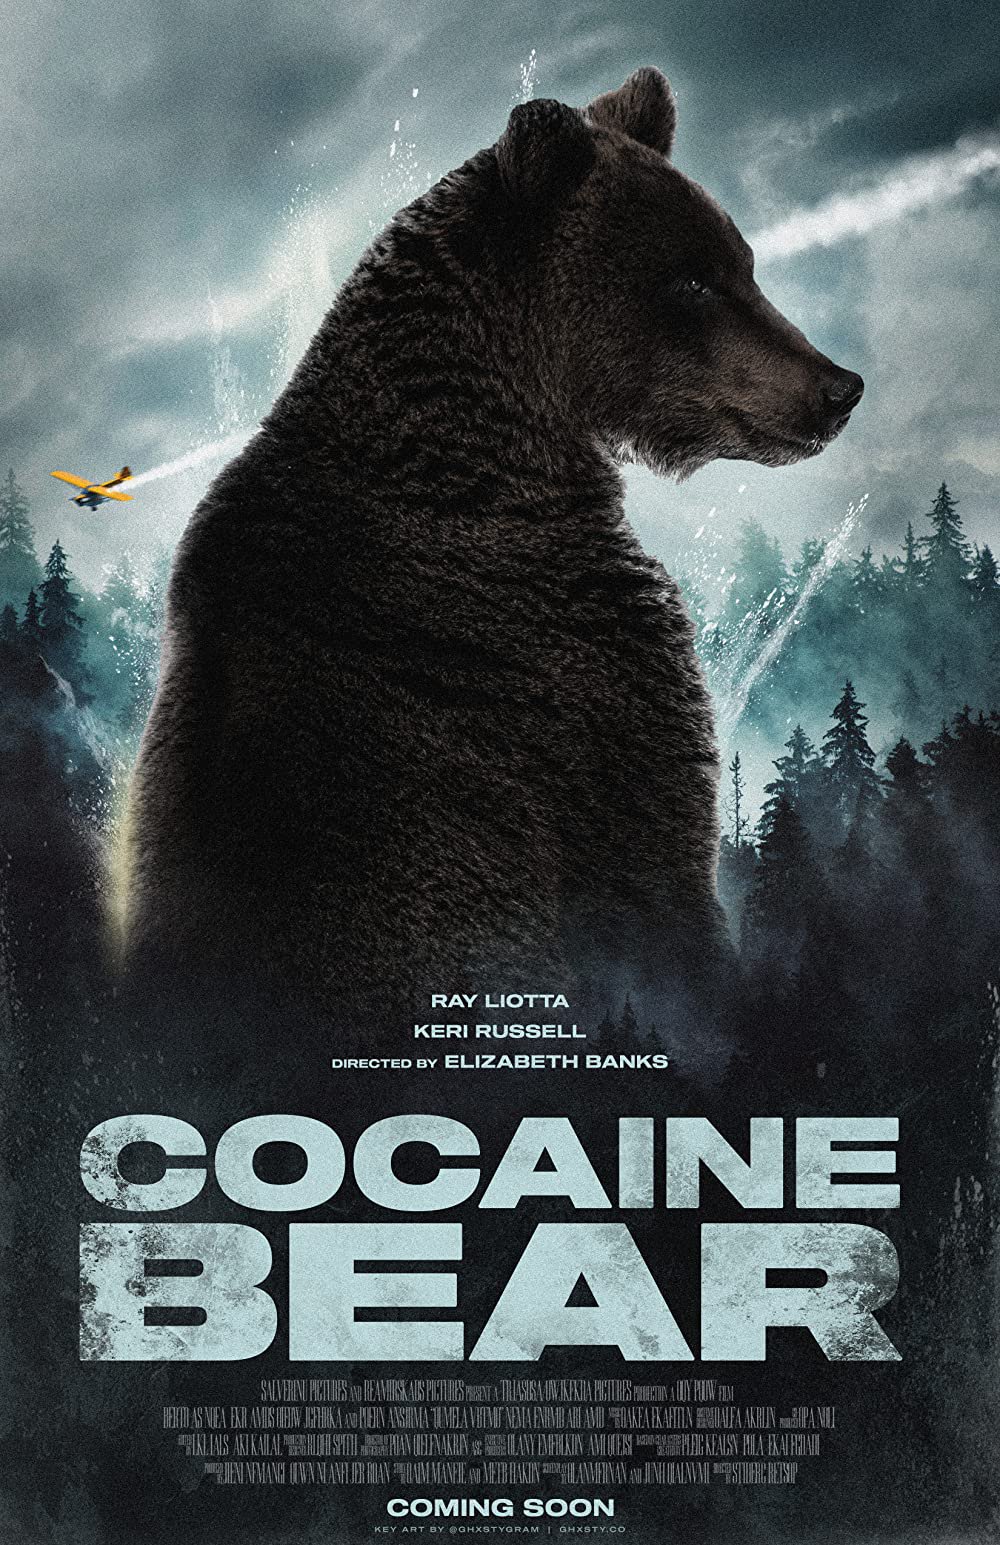 A volta de Pablo EscoBear: O Urso do Pó Branco, o filme baseado